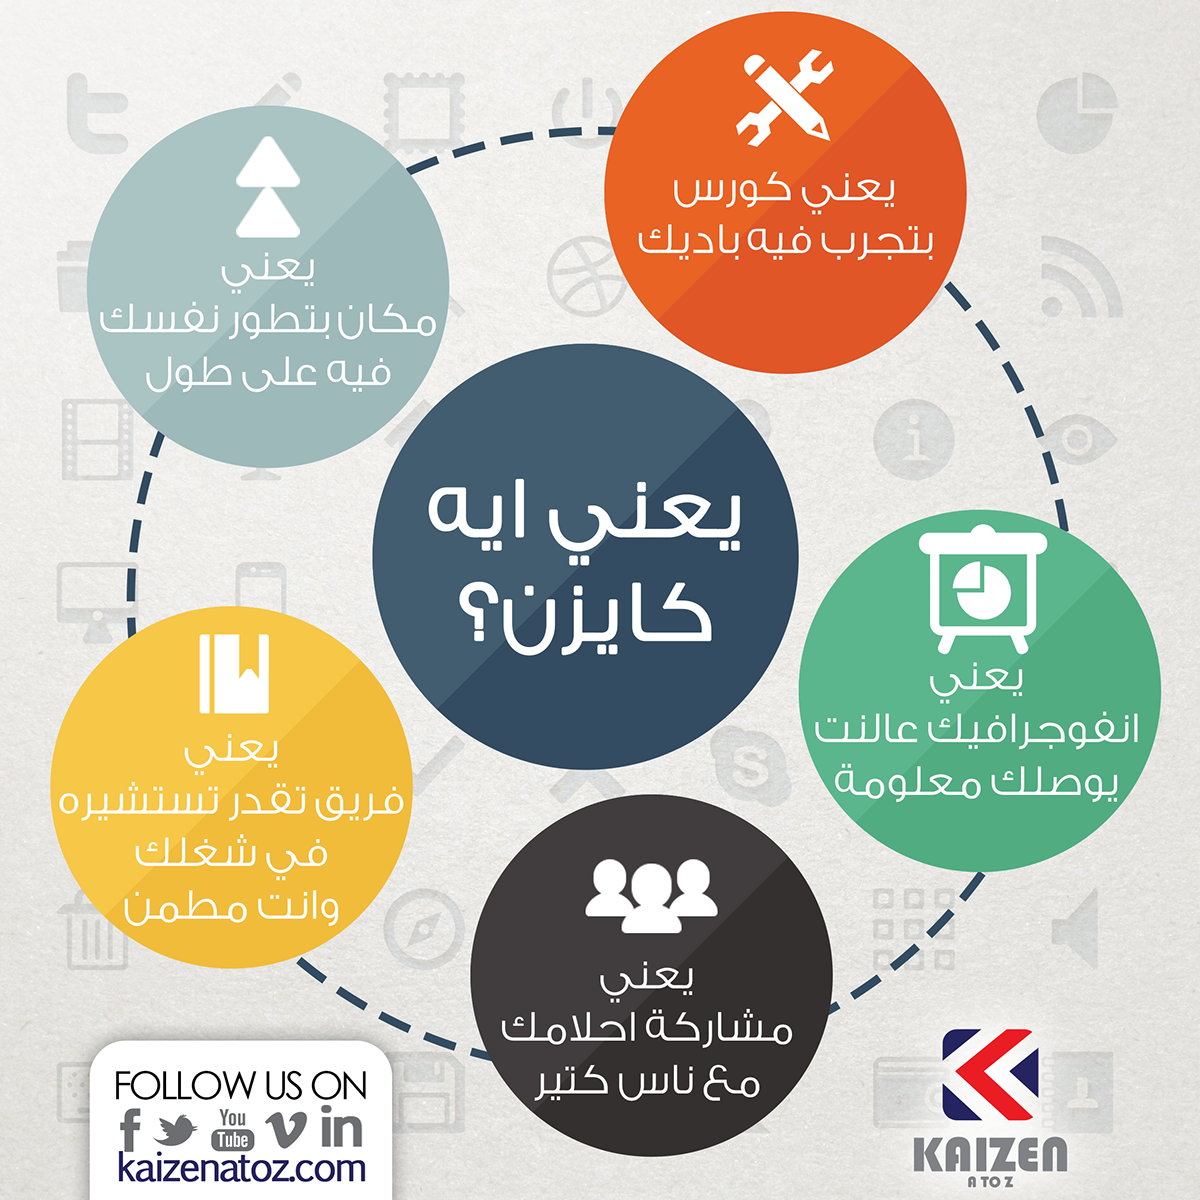 khatawy kaizen flat flat design icons social media infographic #Ps25Under25